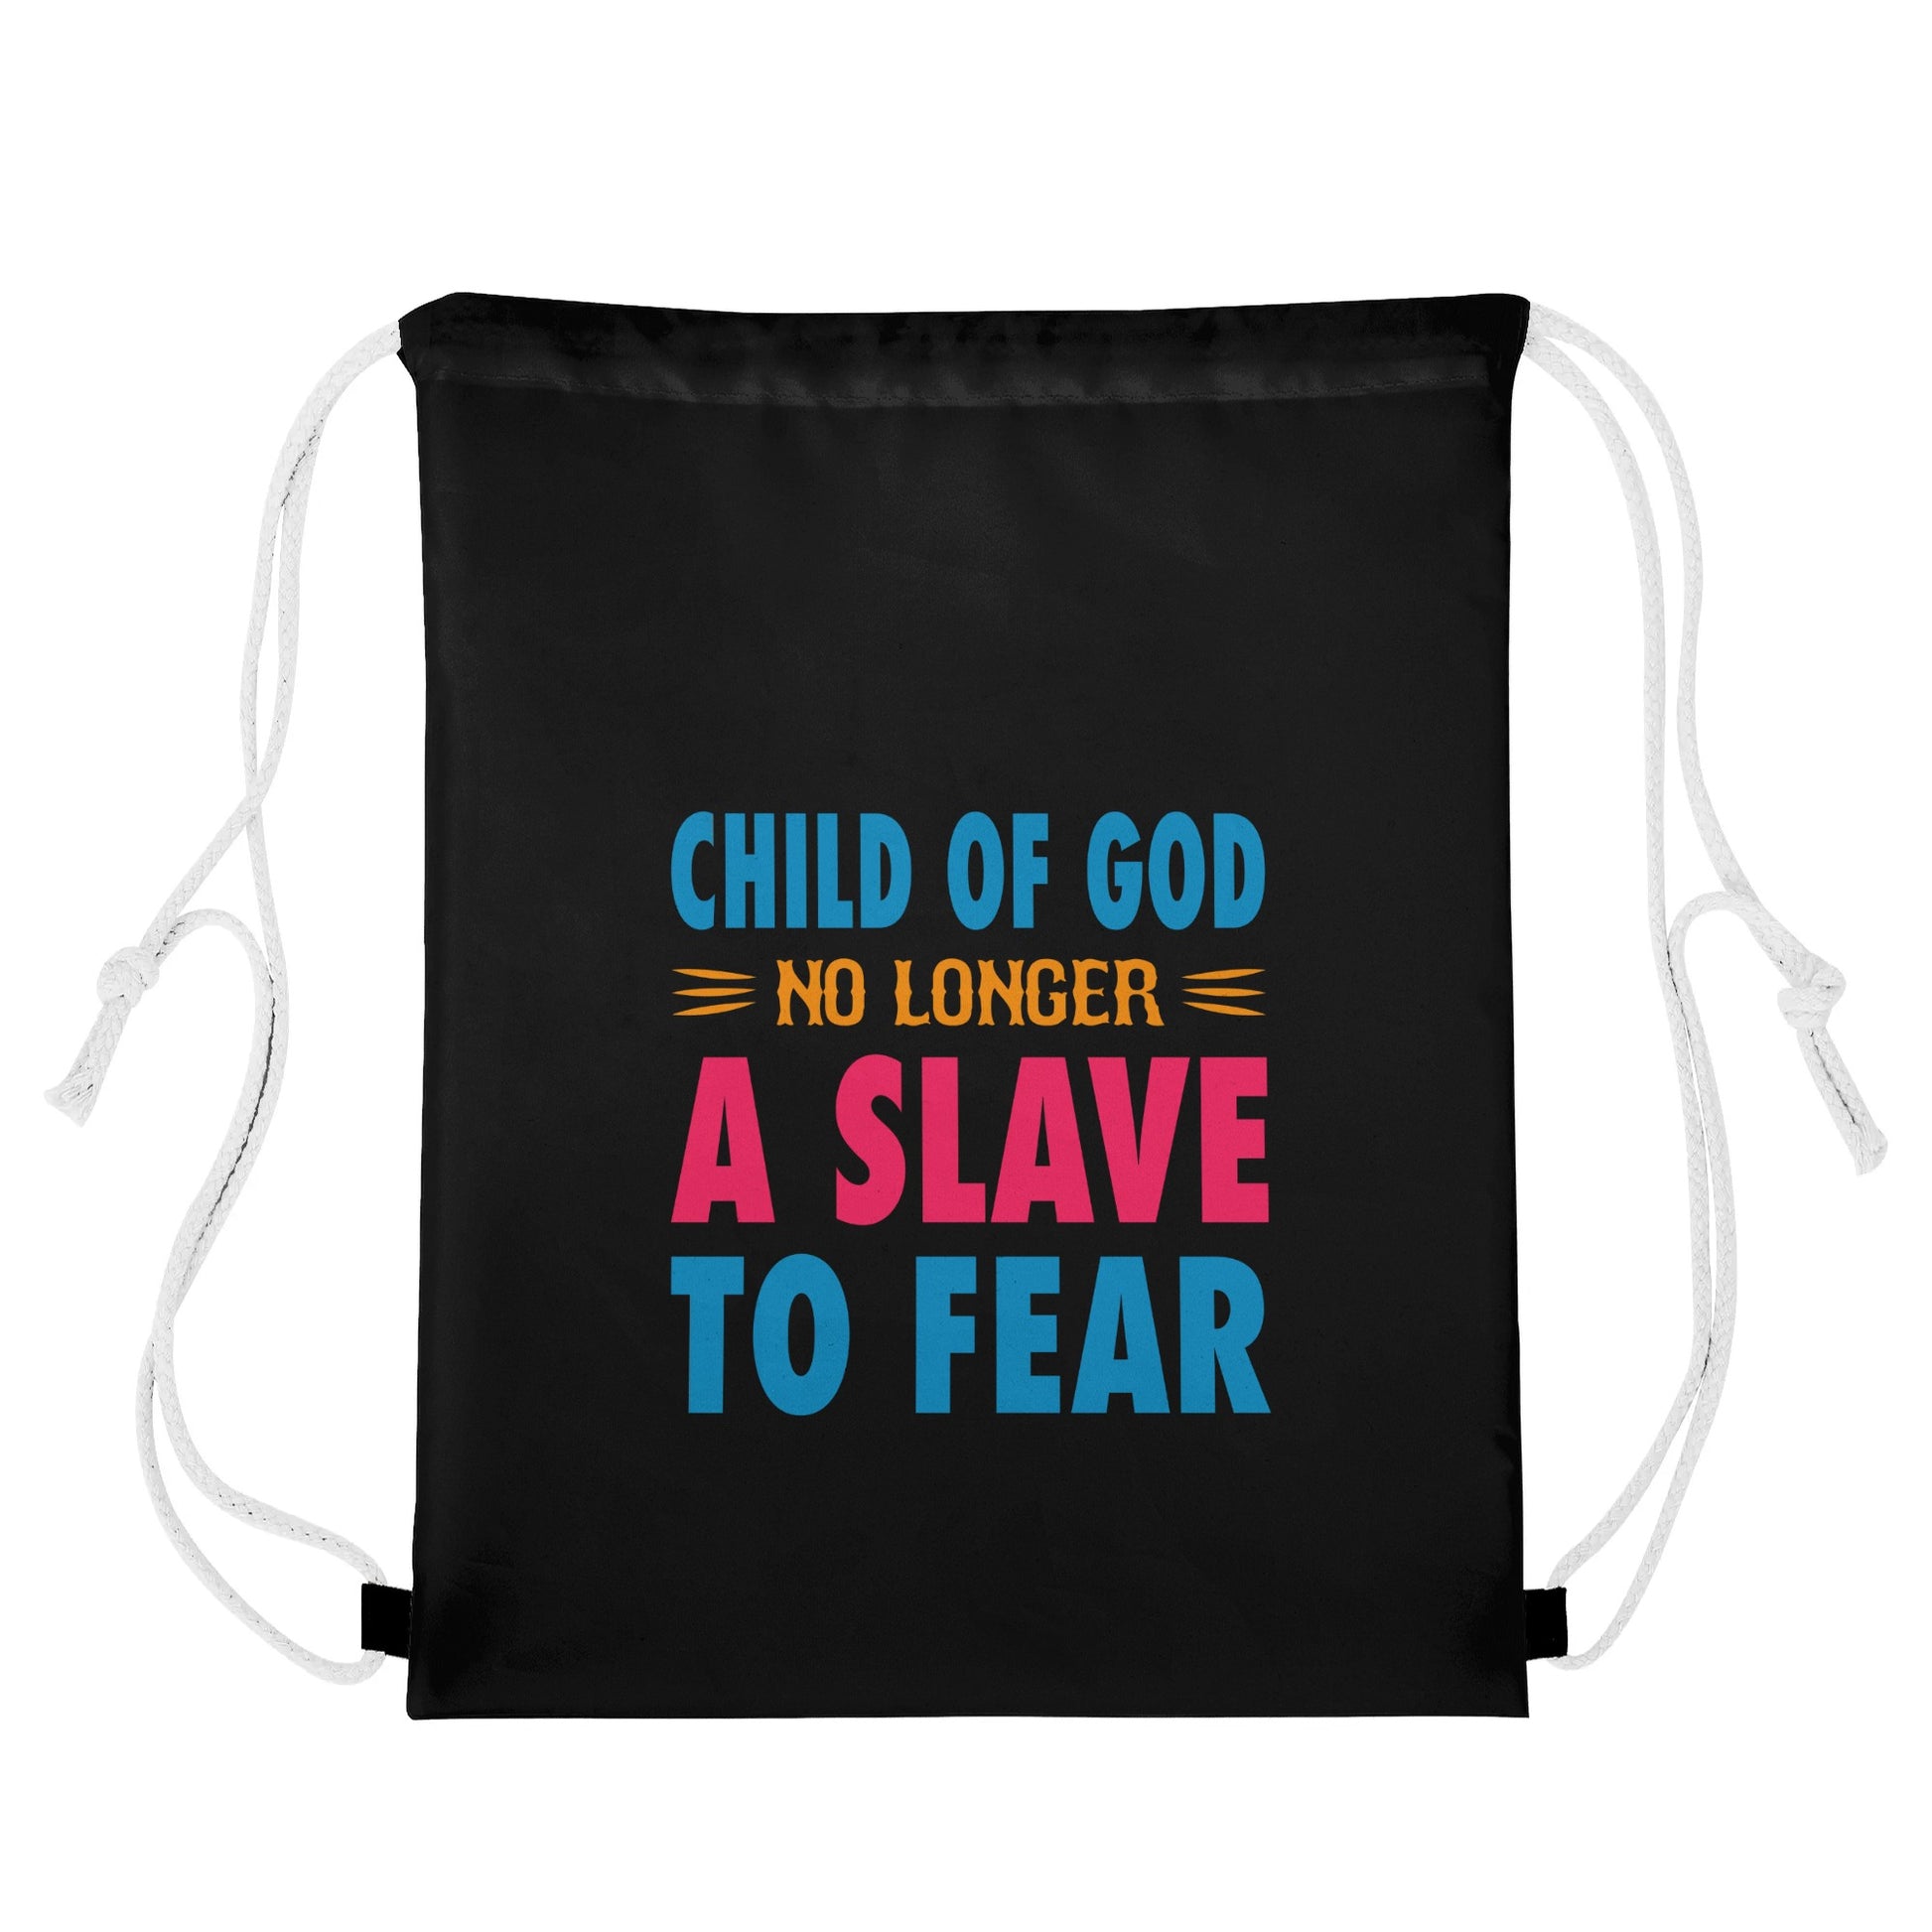 Child Of God No Longer A Slave To Fear Gym Drawstring Bag popcustoms